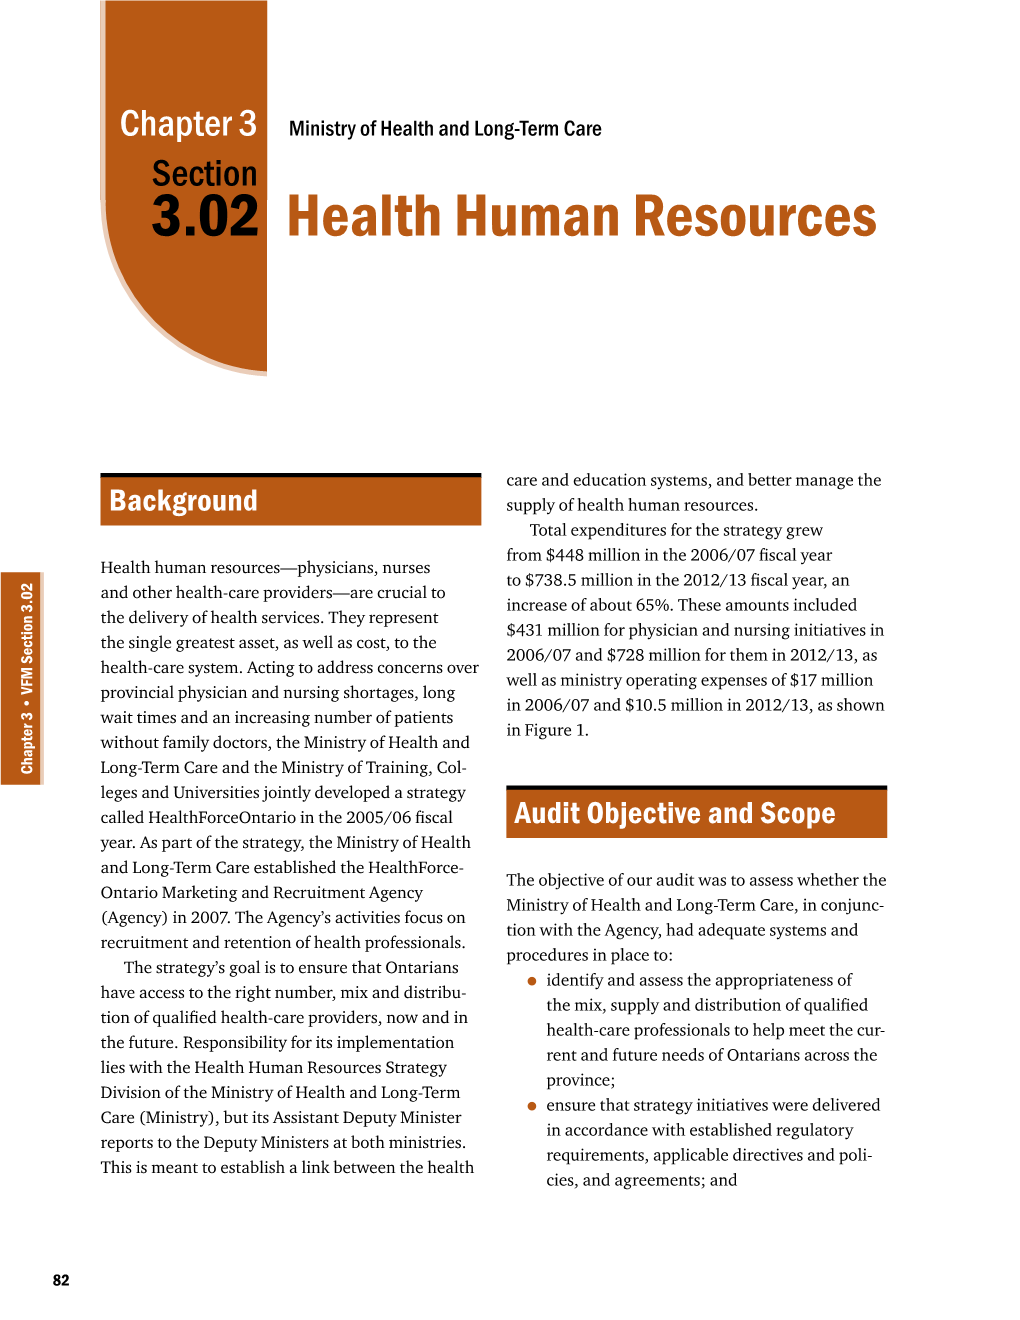 3.02: Health Human Resources